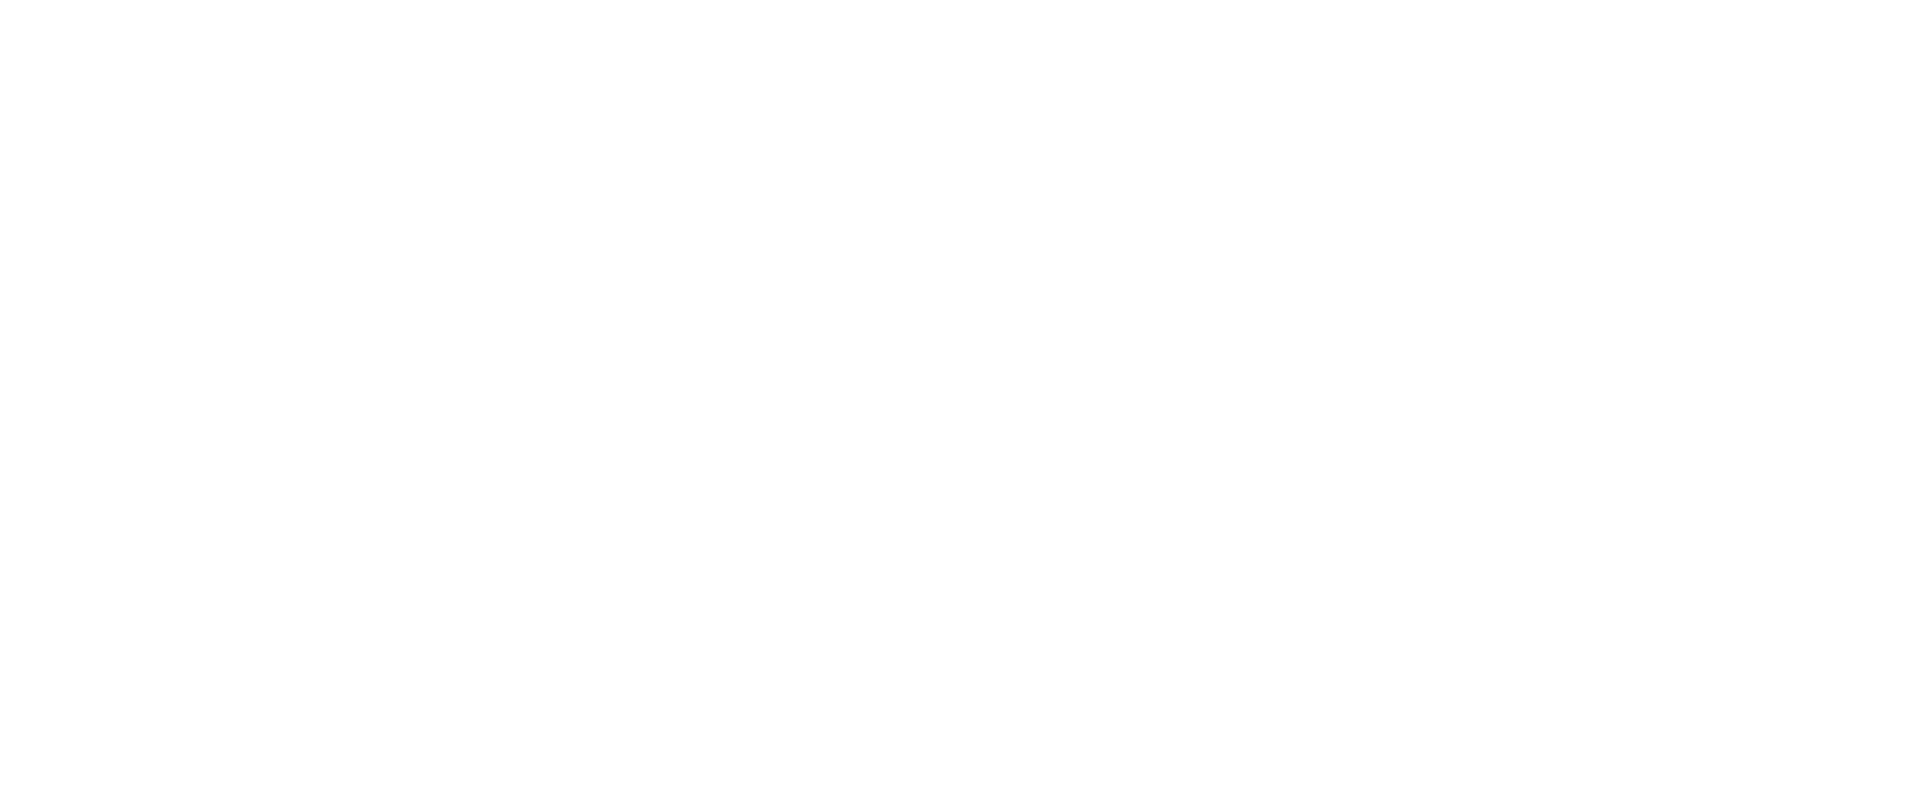 1f Kitchen floor